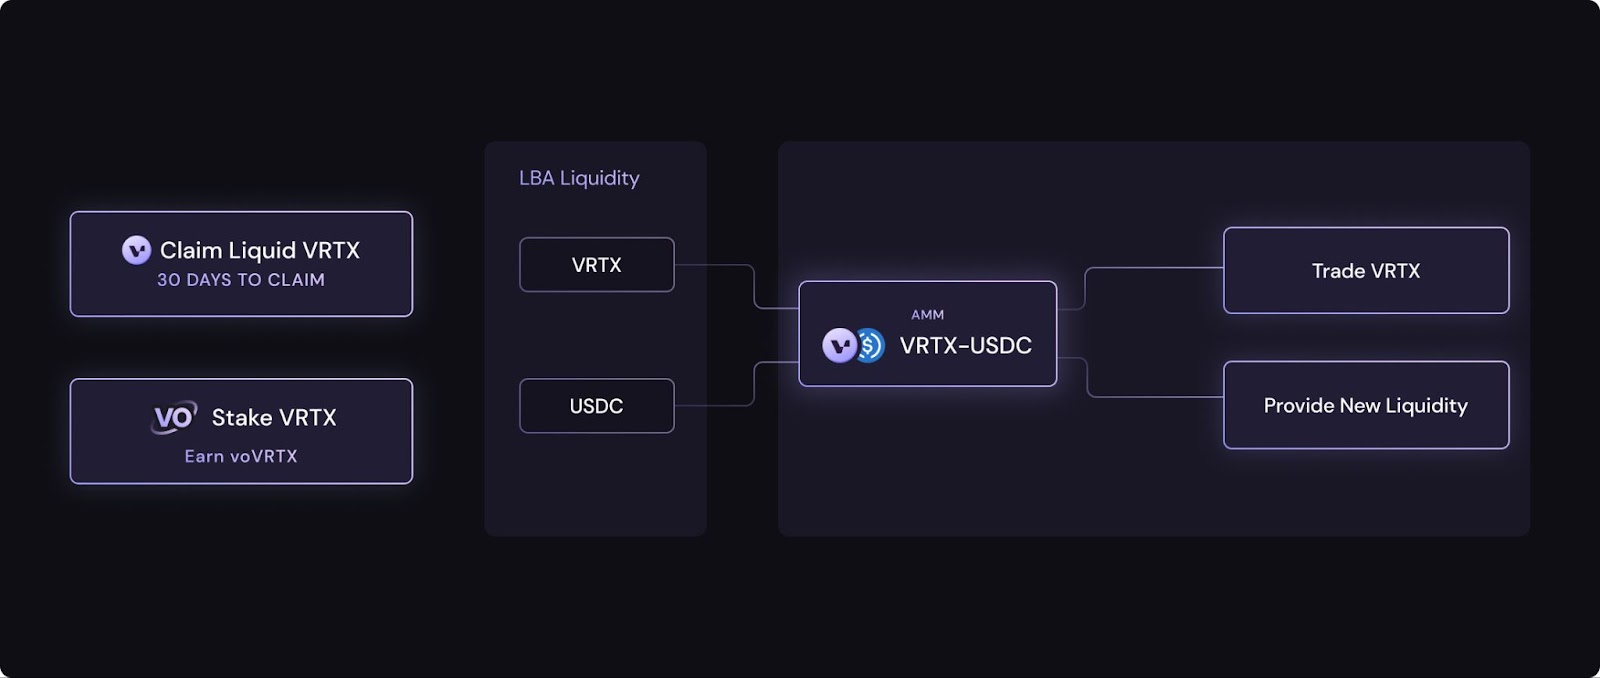 The VRTX Token Launch